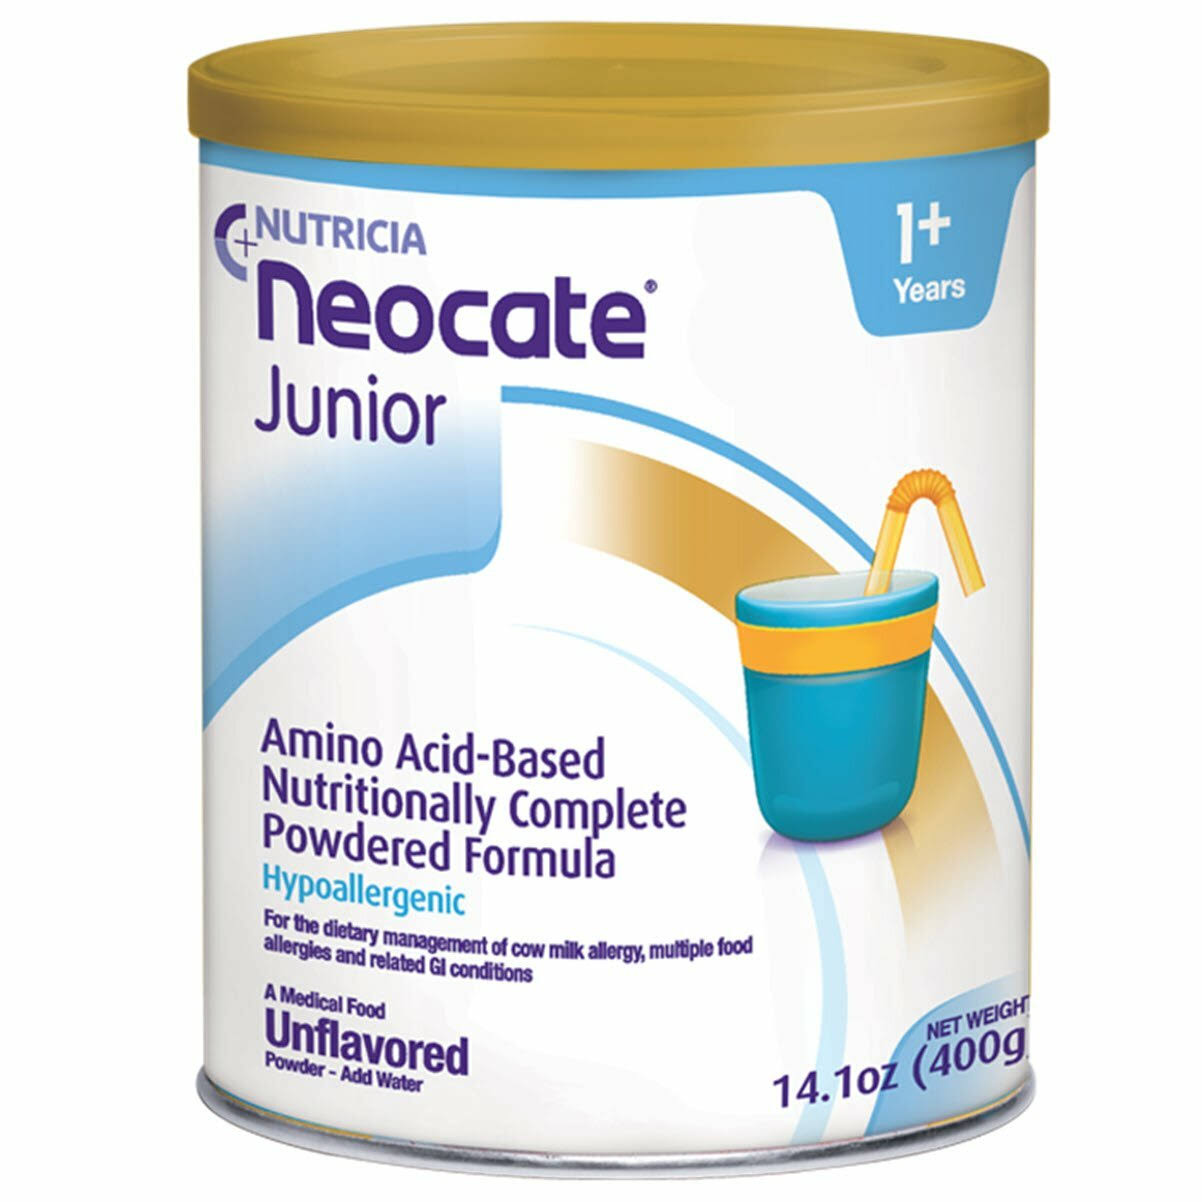 Neocate Junior - Unflavored, 14.1oz